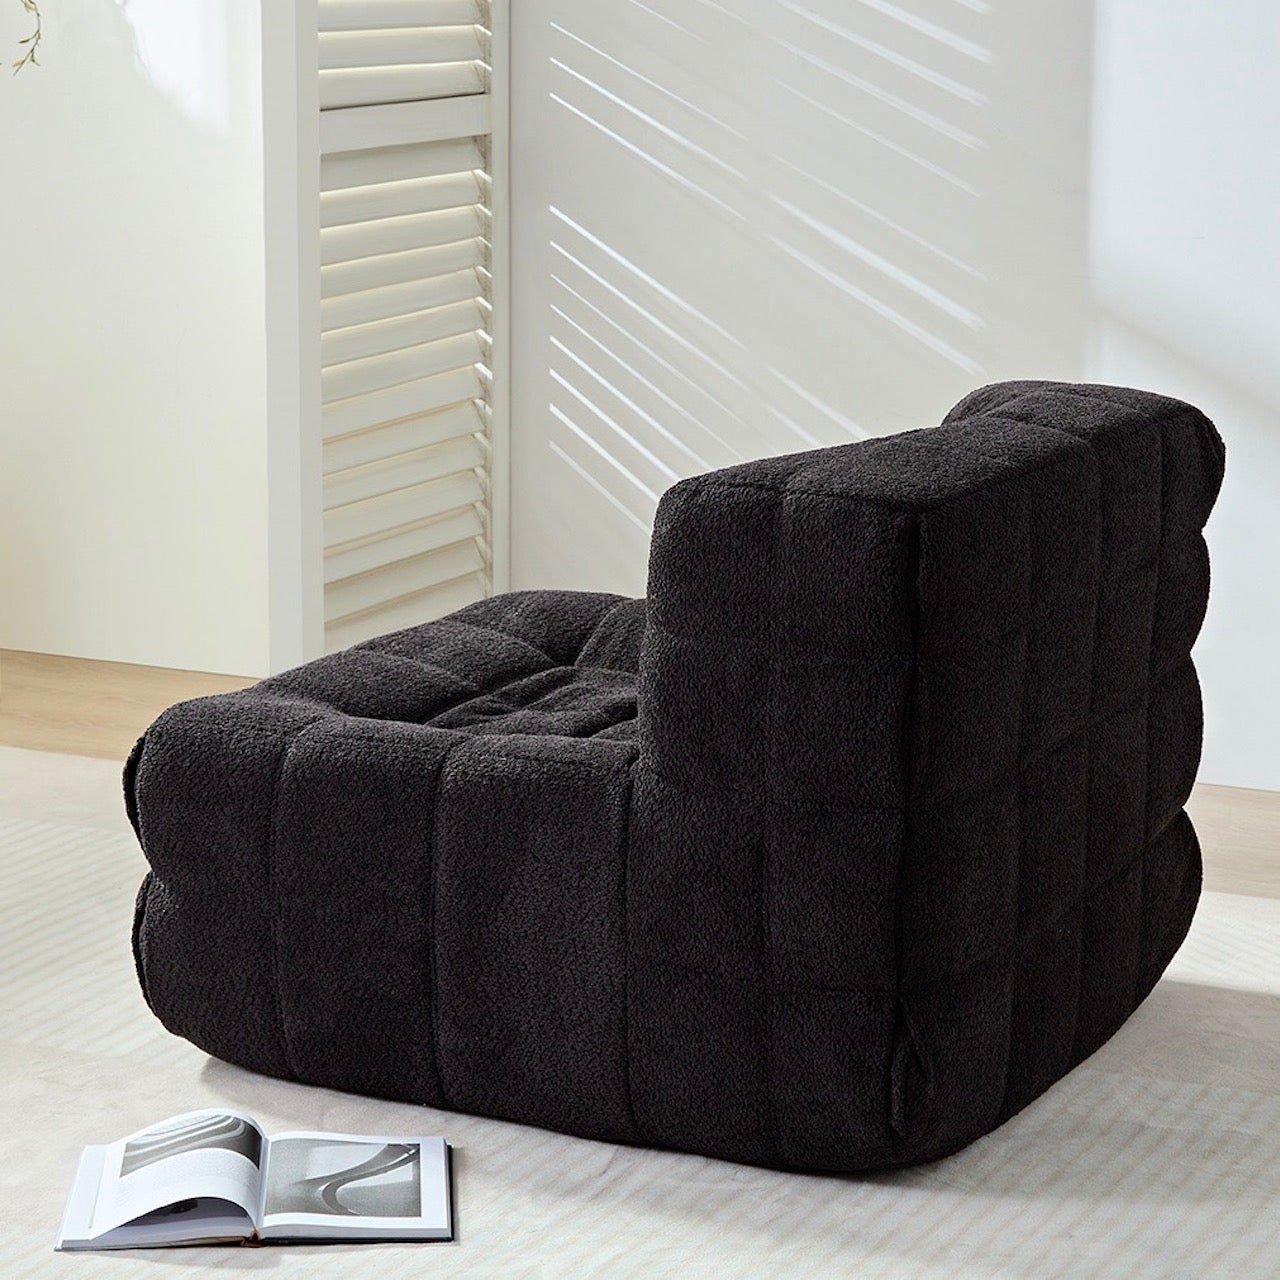 Retro-inspired black square caterpillar chair with plush corduroy fabric